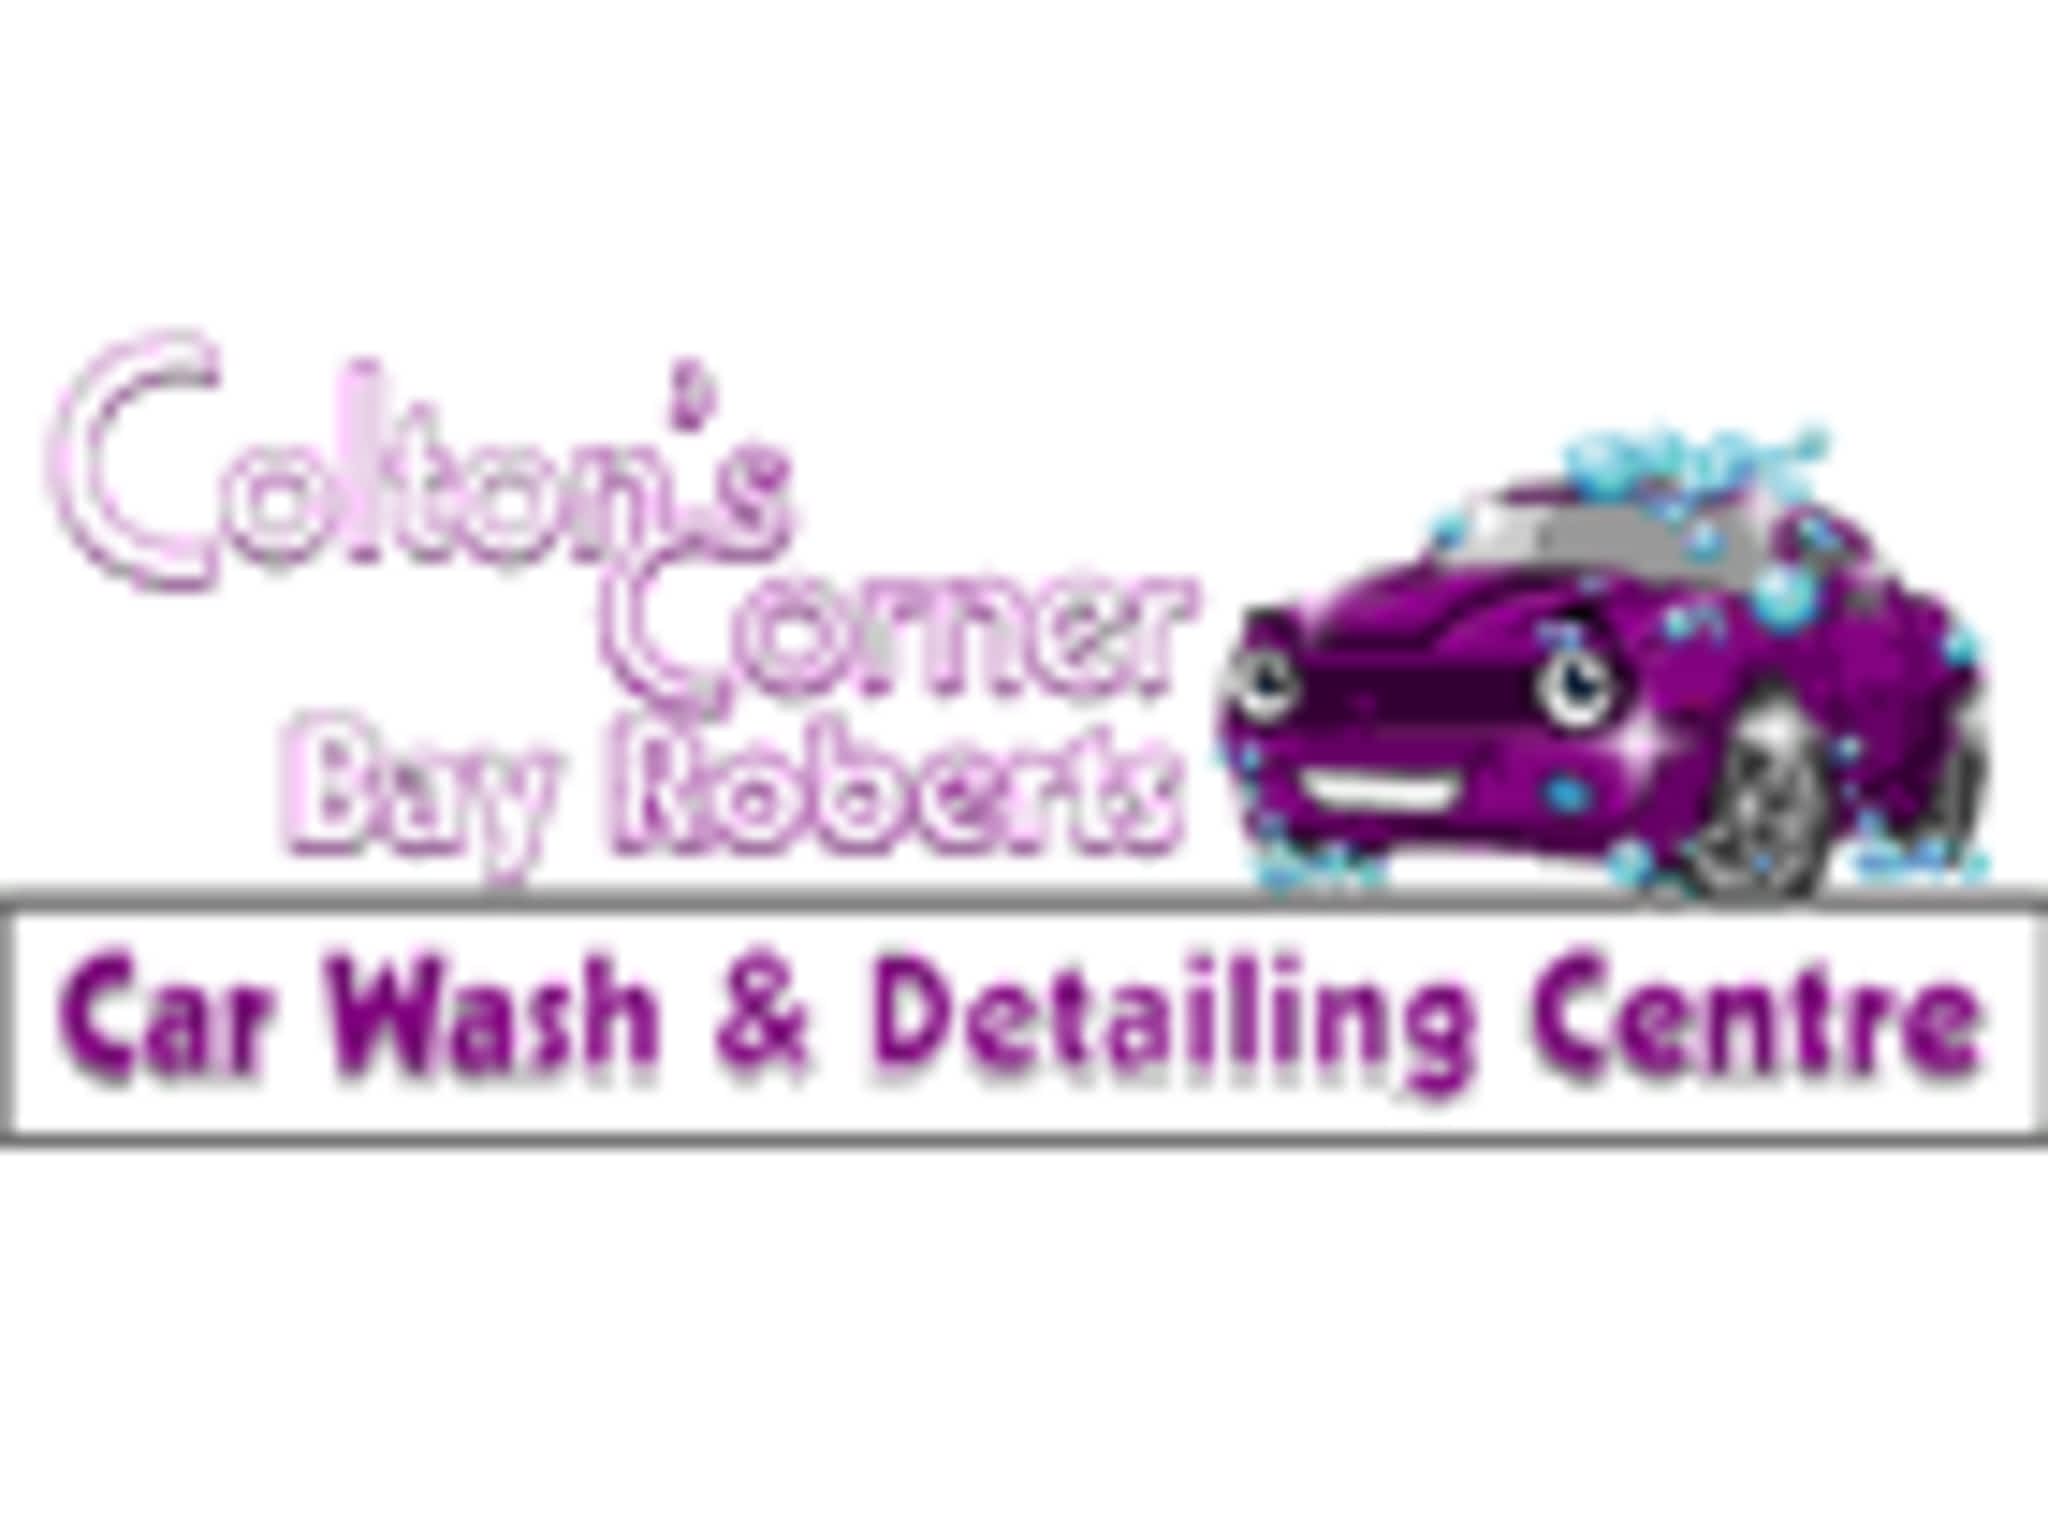 photo Colton's Corner Car Wash & Detailing Center